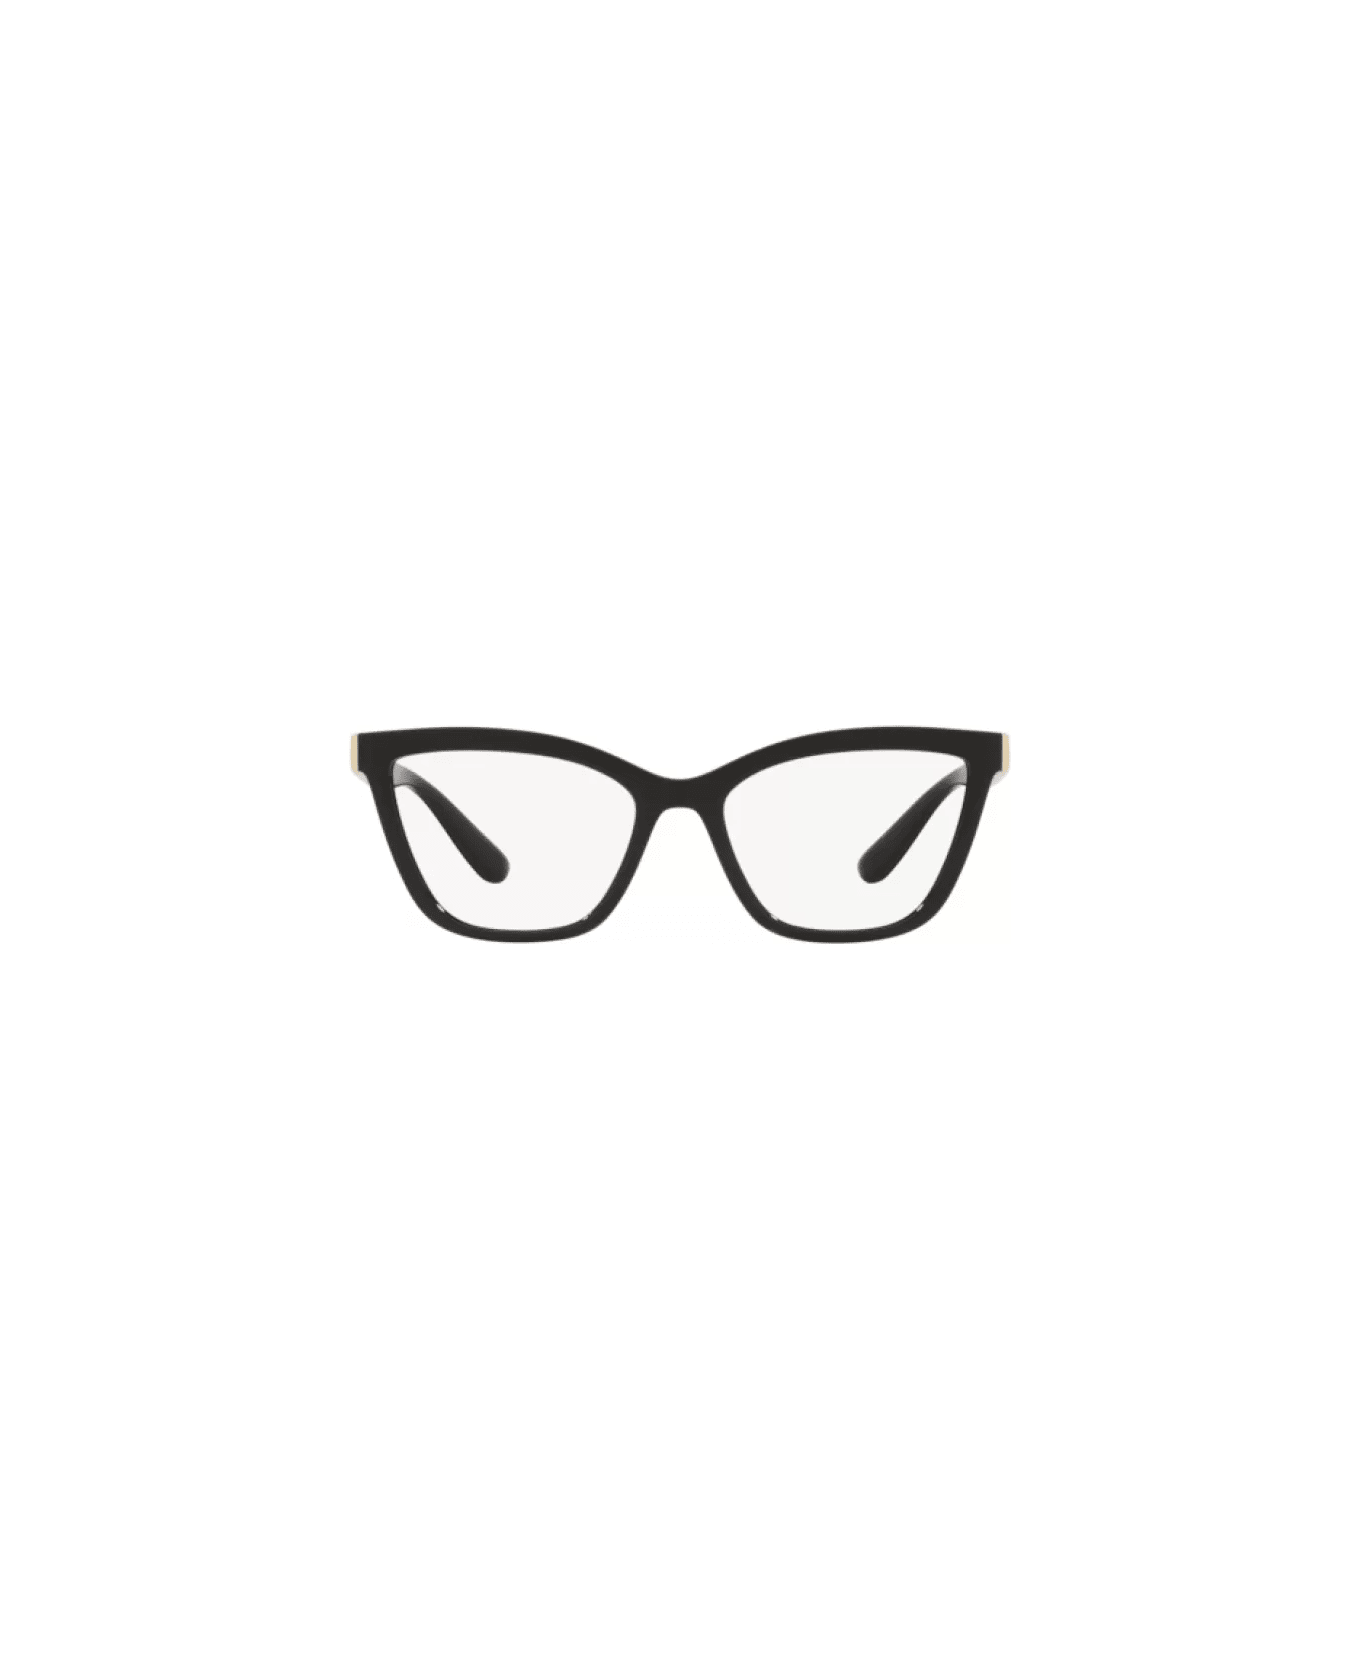 Dolce & Gabbana Eyewear DG5076 501 Glasses